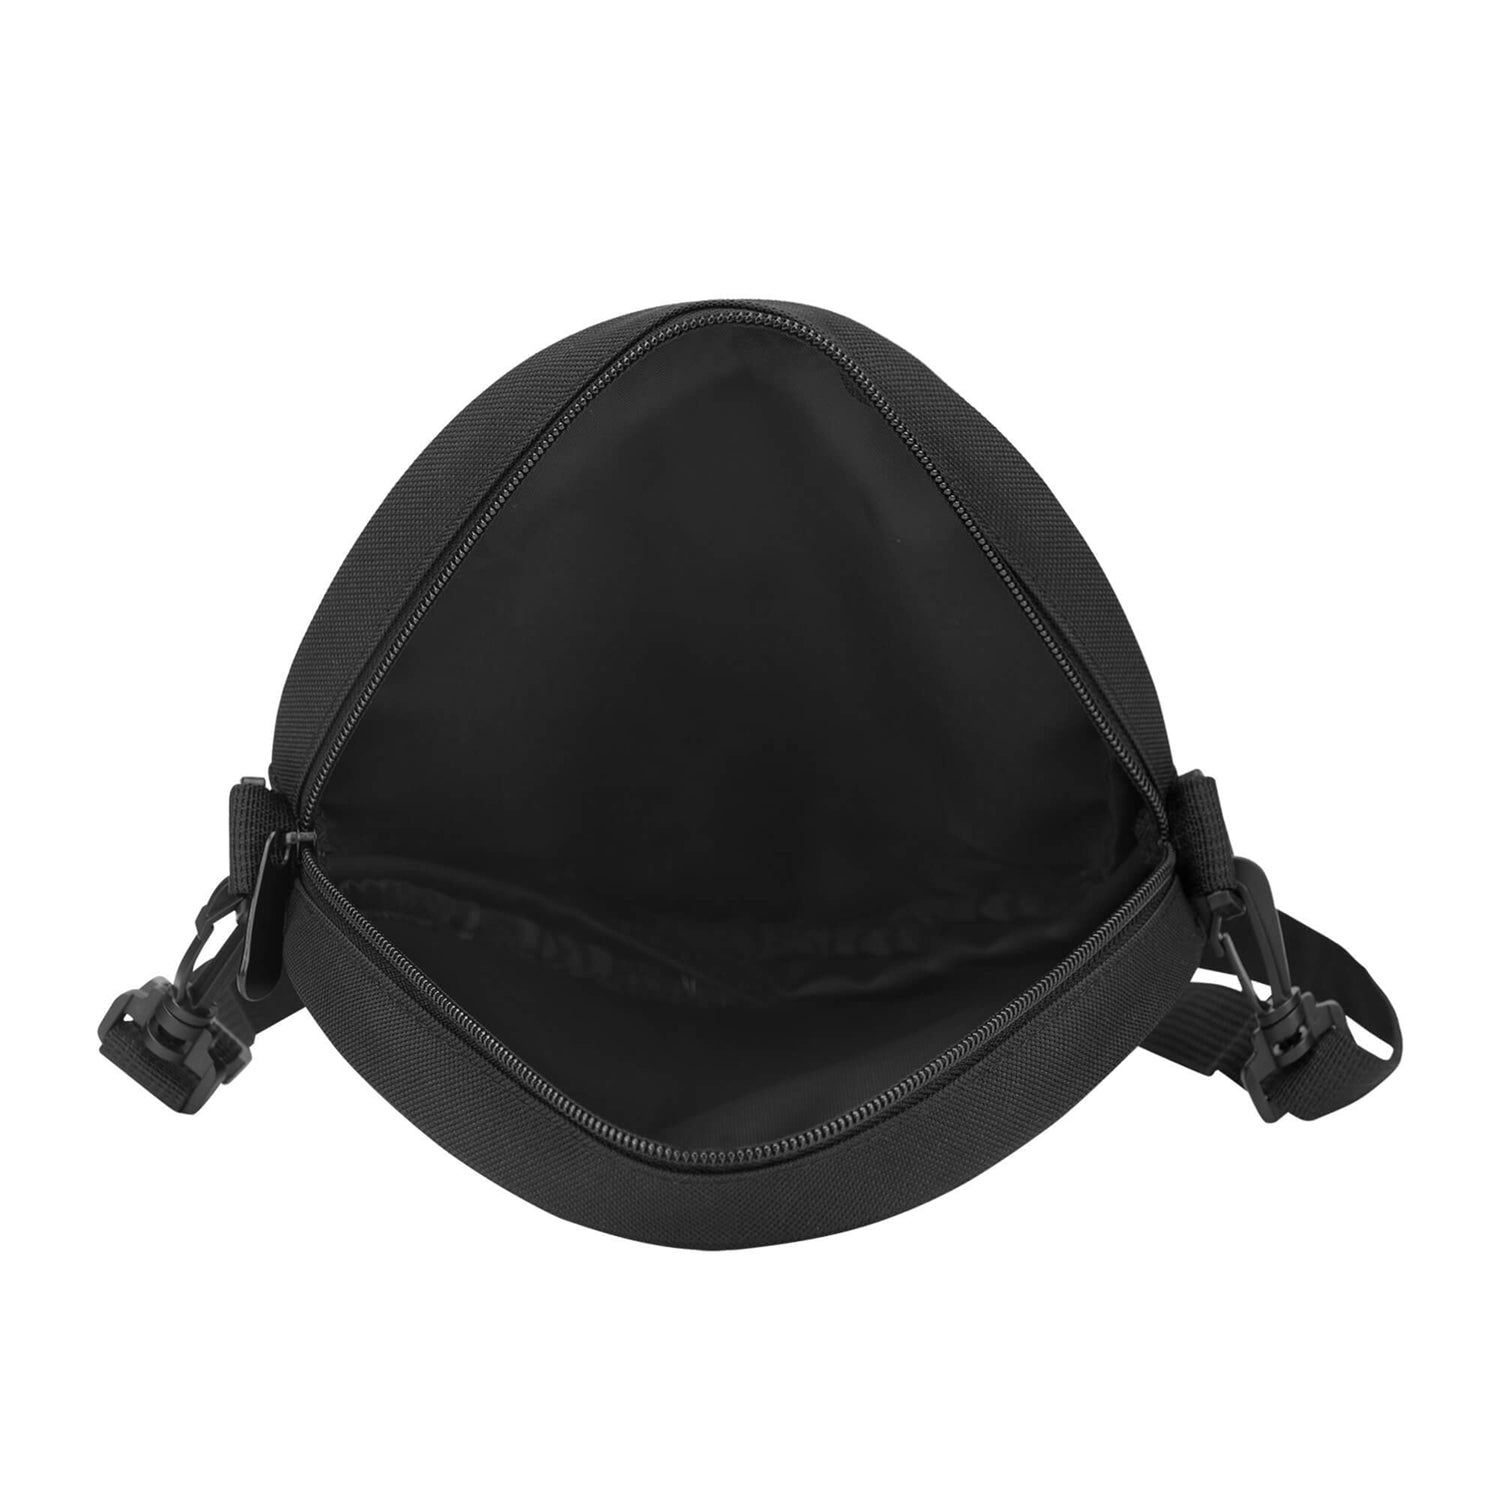 sutherland-weathered-tartan-round-satchel-bags